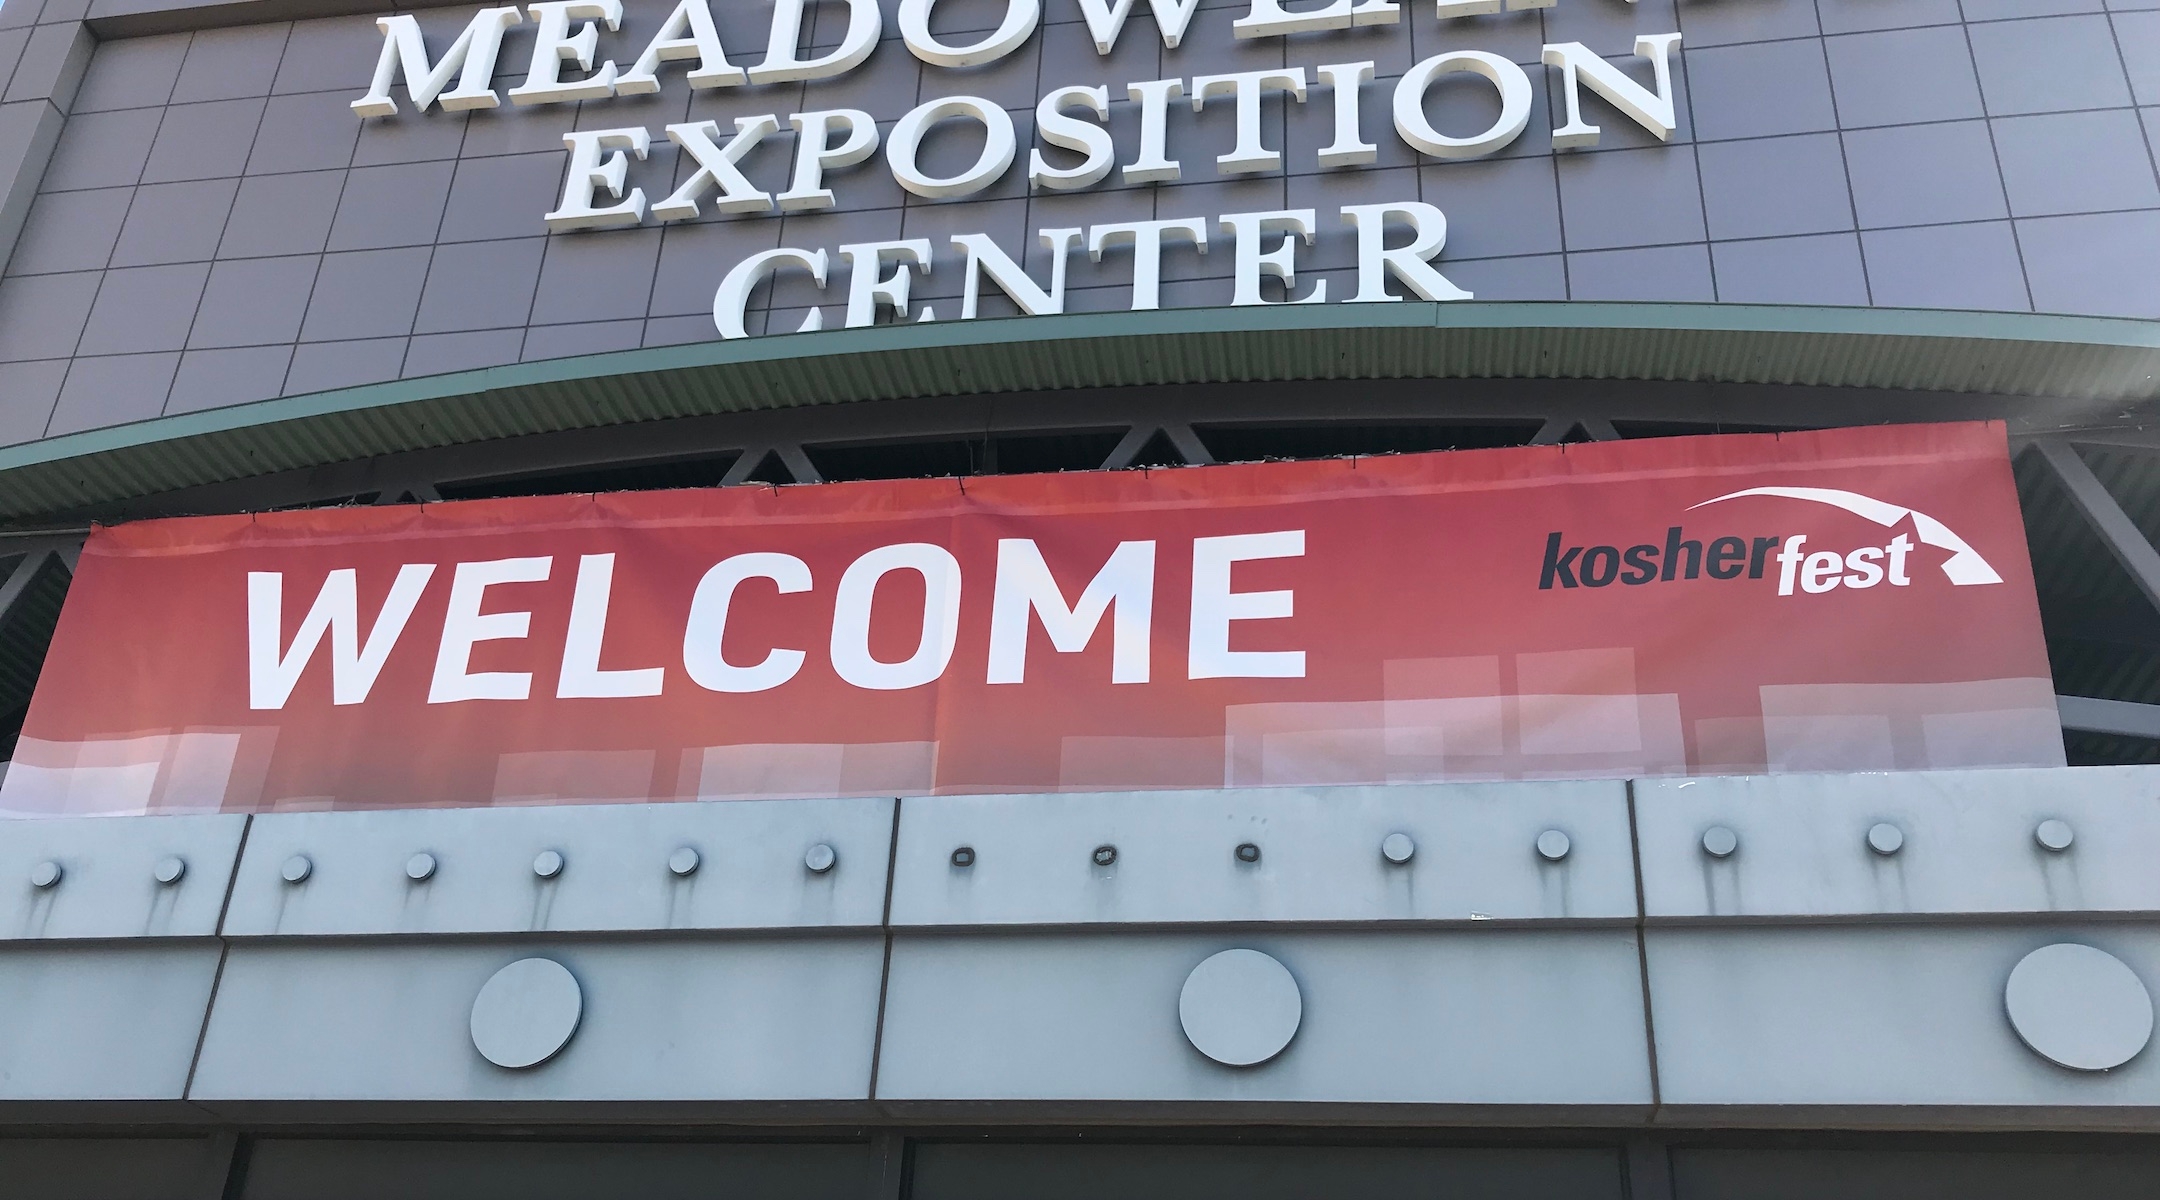 Kosherfest welcome sign